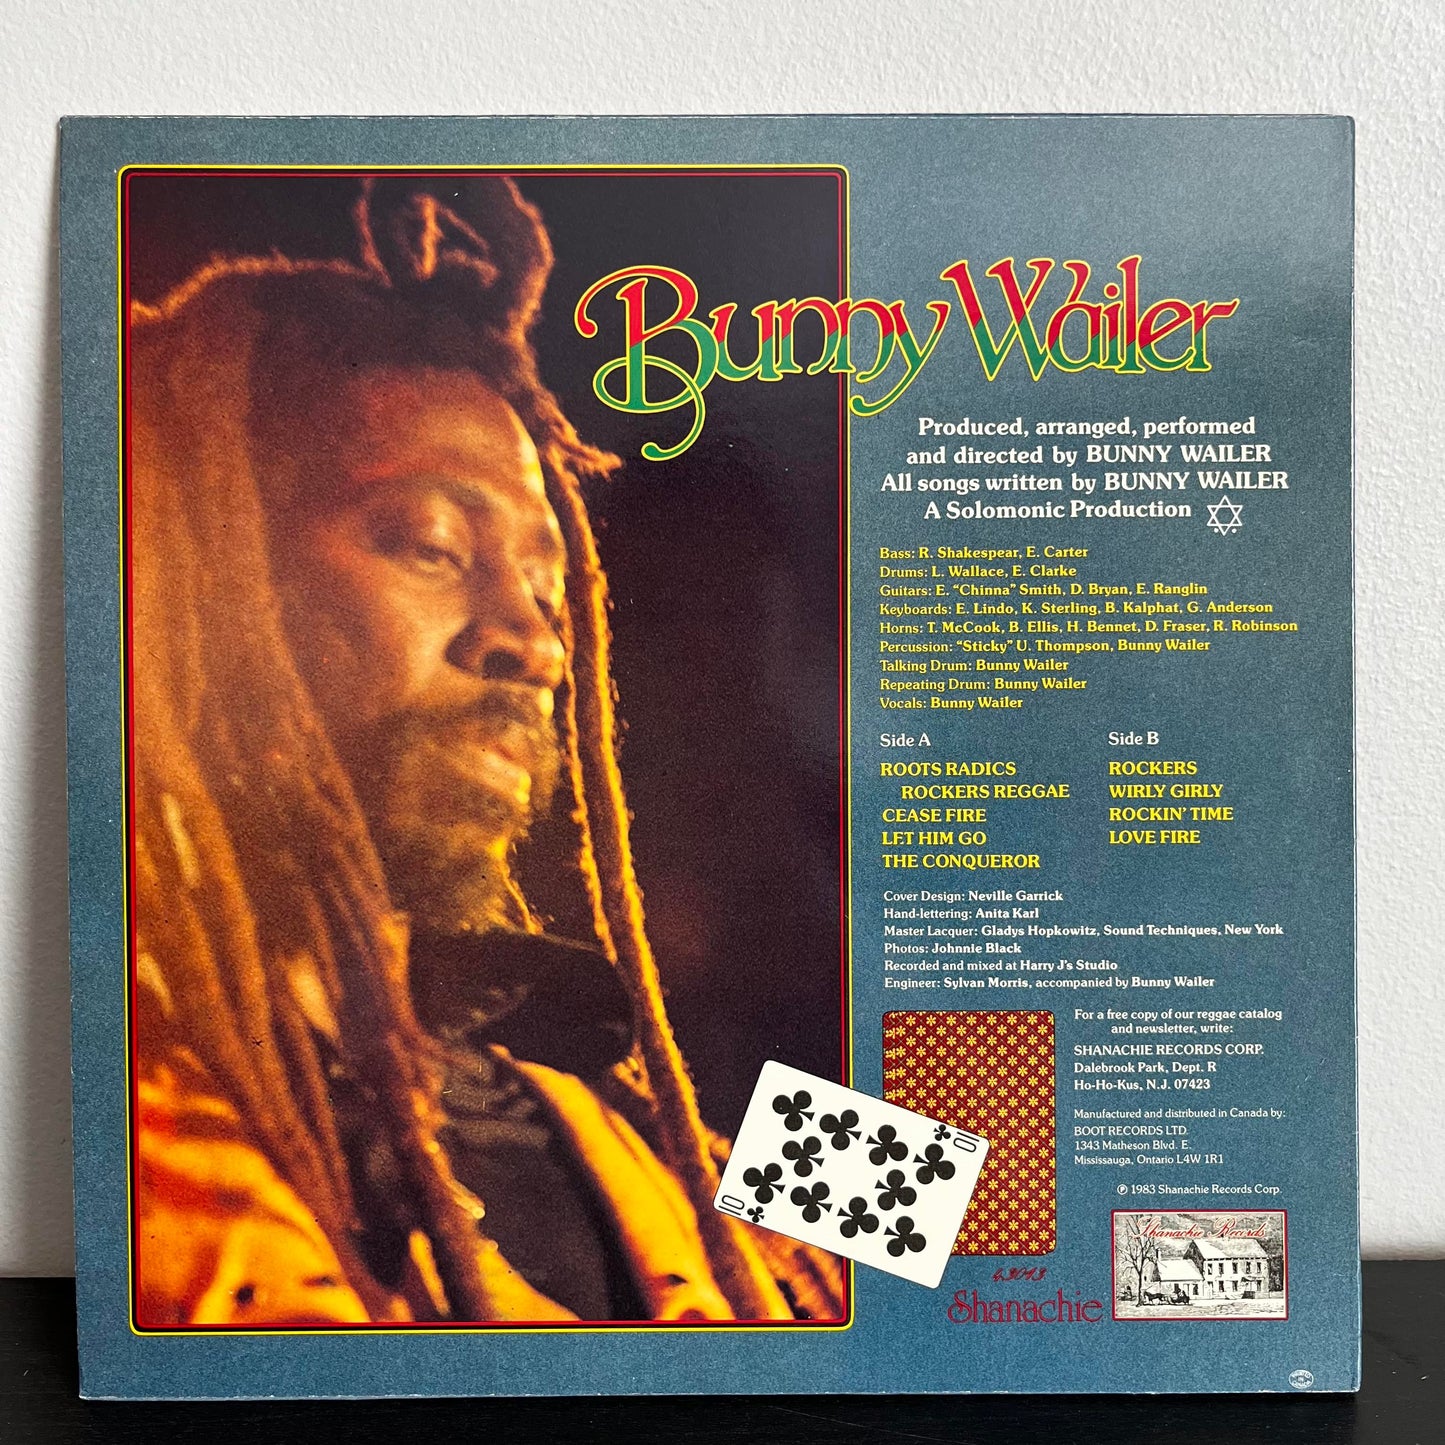 Bunny Wailer Roost Radios Rockers Reggae Shanachie 43013 Vinyl  VG+/EX